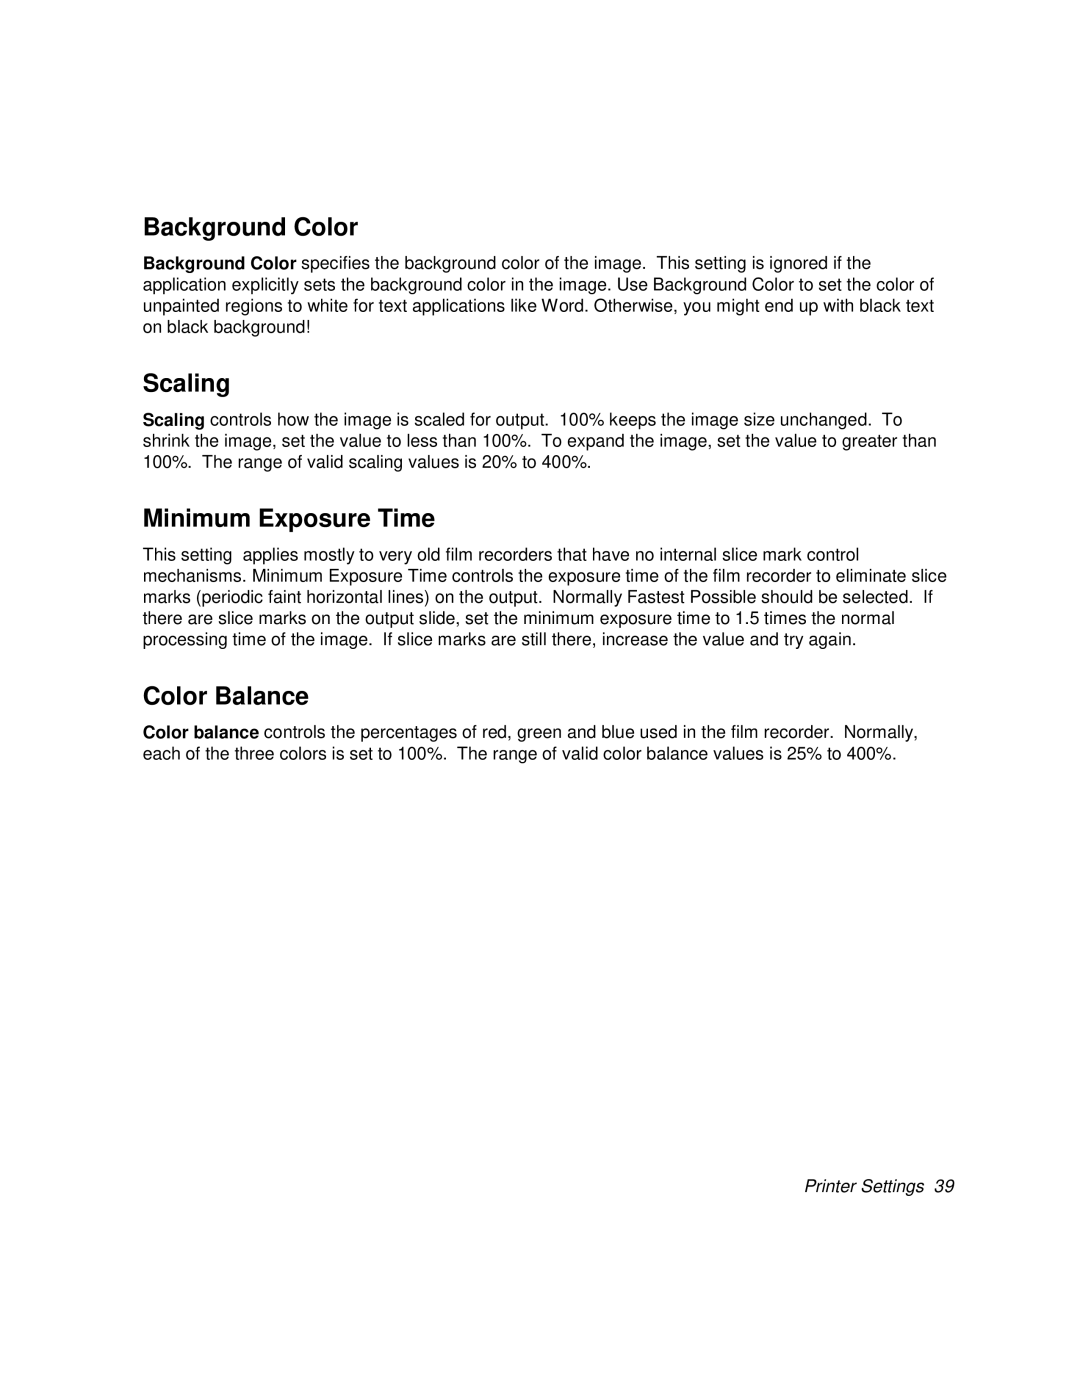 Polaroid BLL Generator manual Background Color, Scaling, Minimum Exposure Time, Color Balance, Printer Settings 